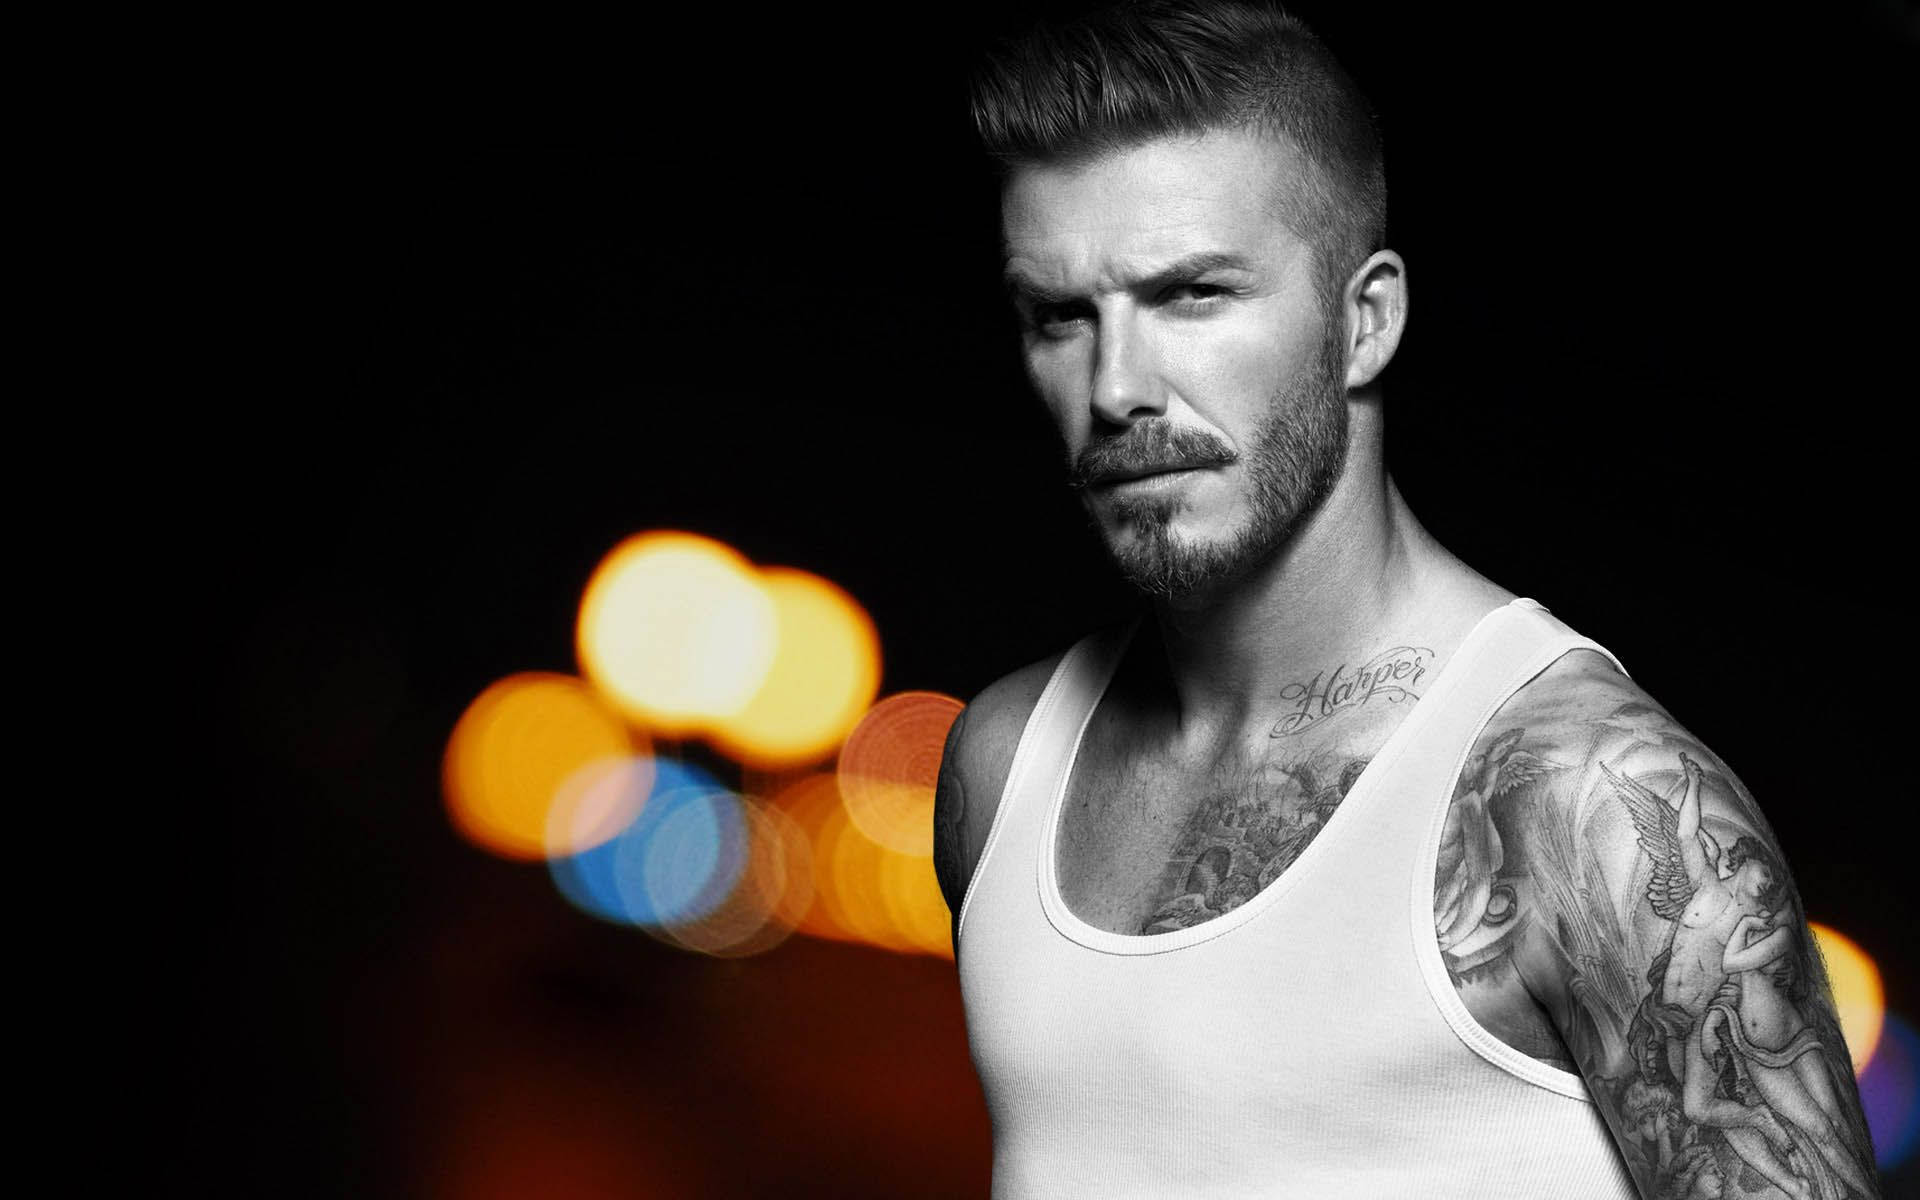 David Beckham portrait in bokeh effect Wallpaper